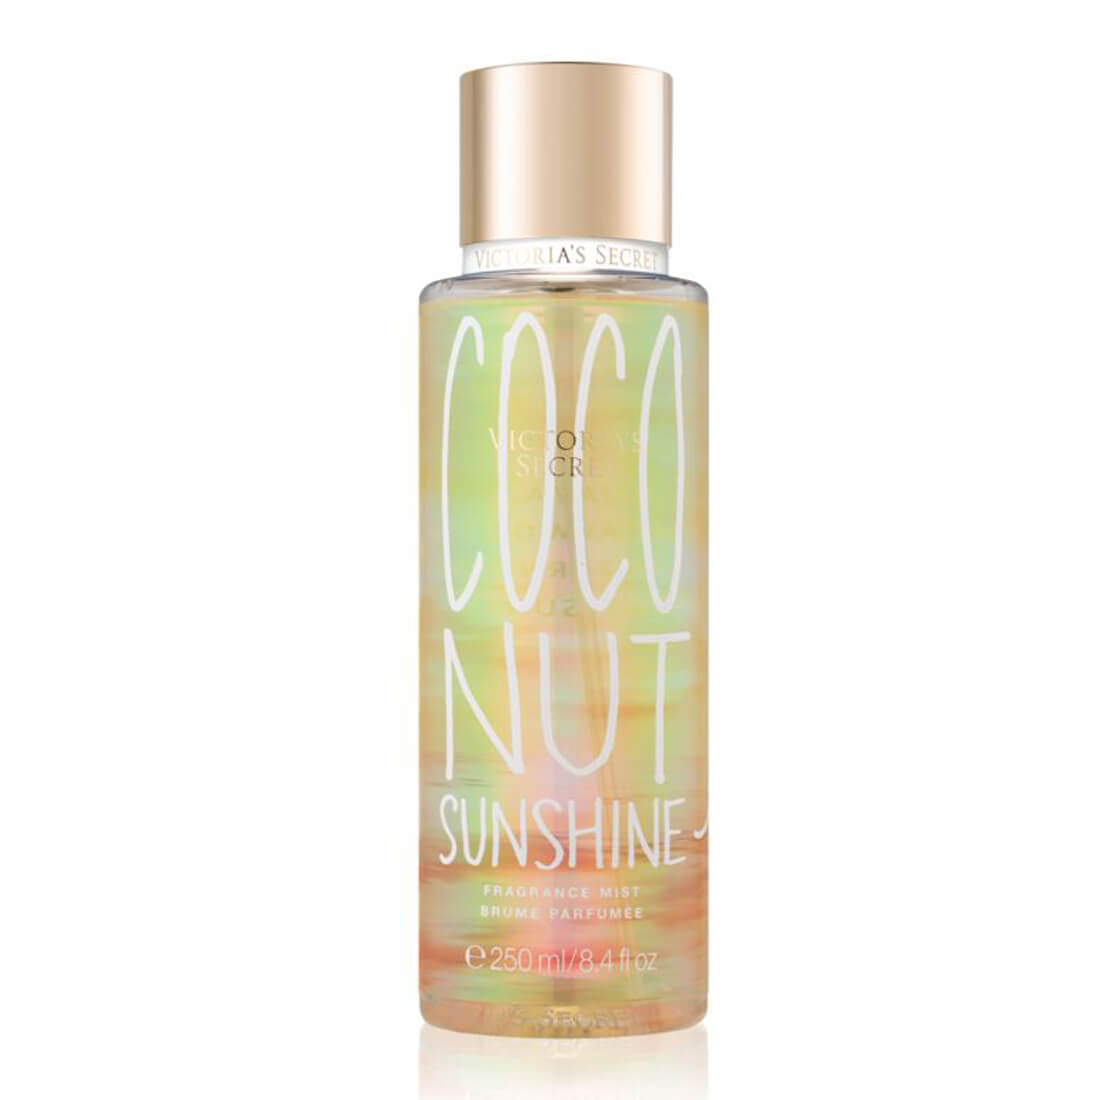 Victoria's Secret Coconut Sunshine Fragrance Mist 250ml –